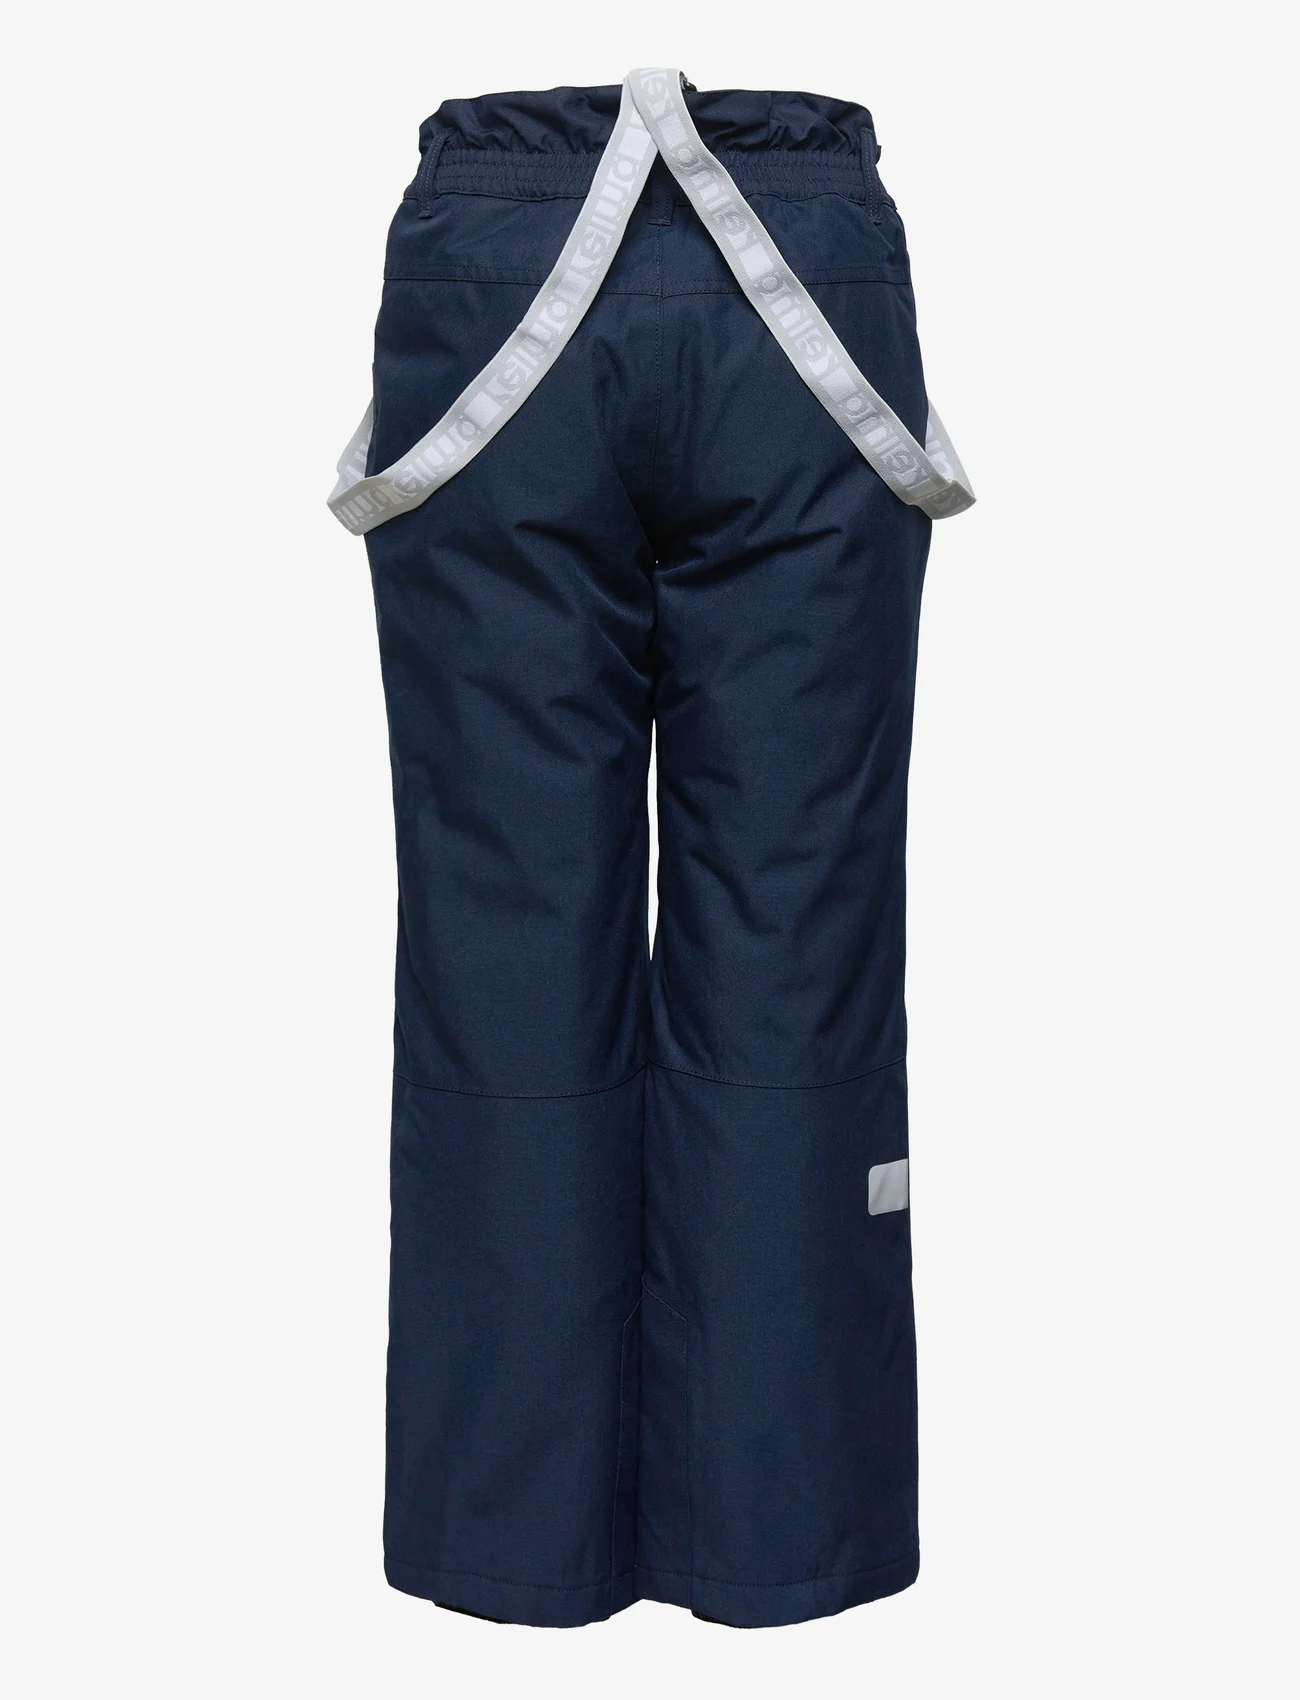 Reima - Kiddo Lightning - winter trousers - navy - 1